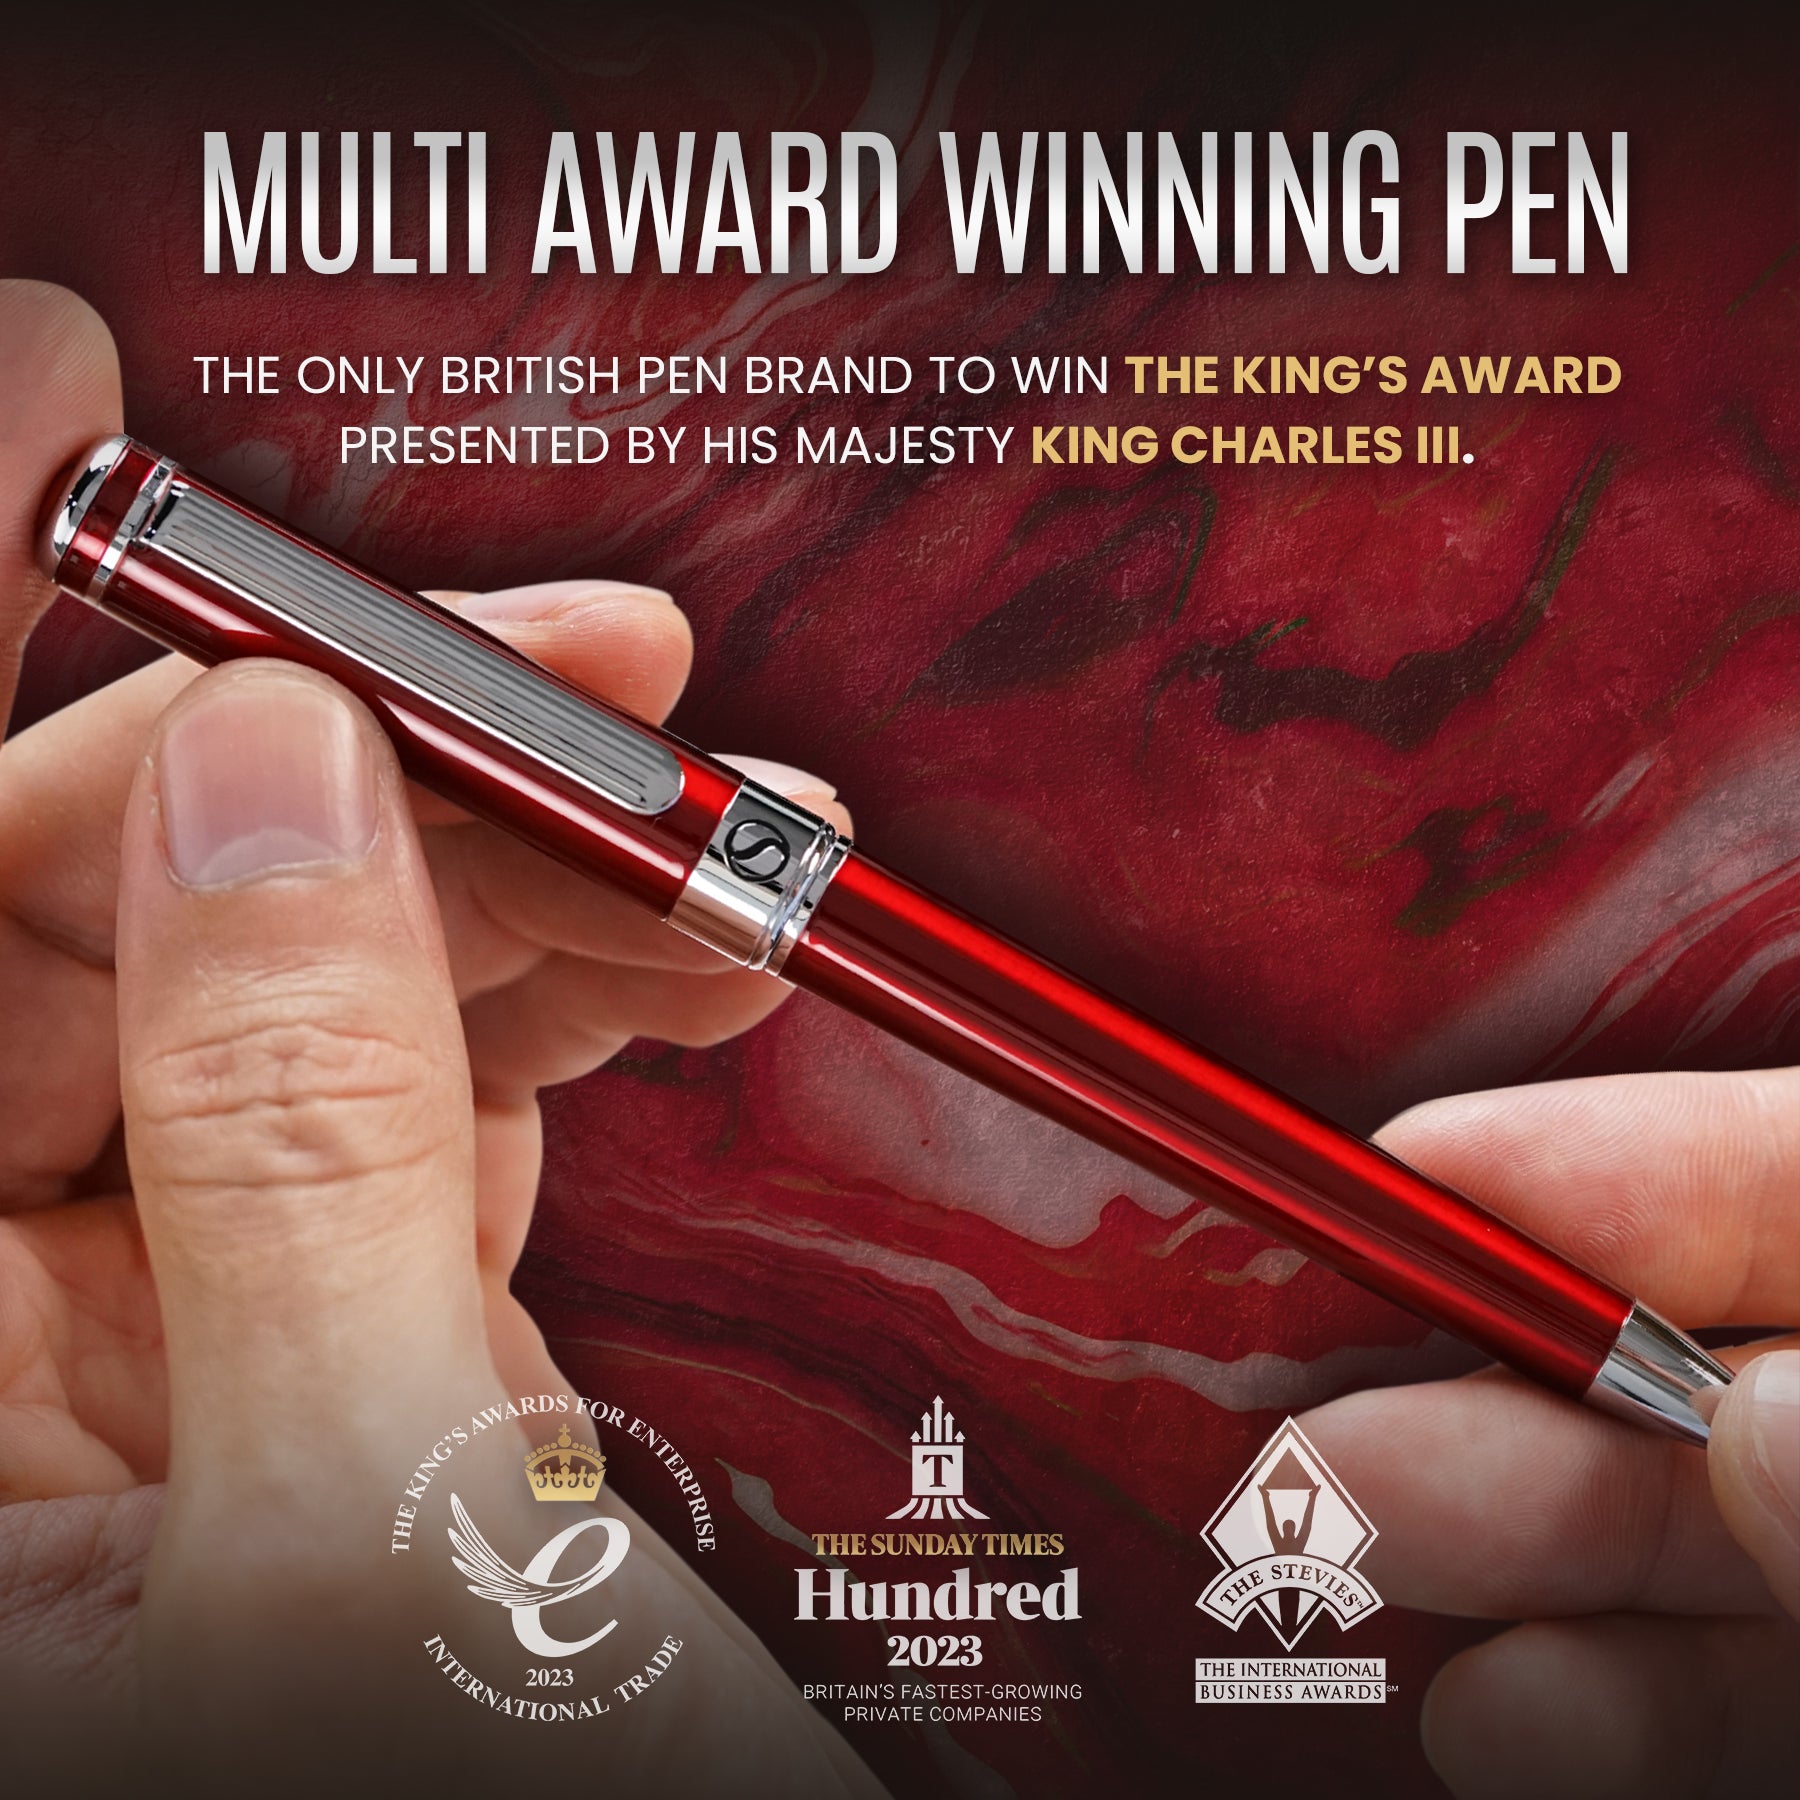 Scriveiner Classic Crimson Red ballpoint Pen